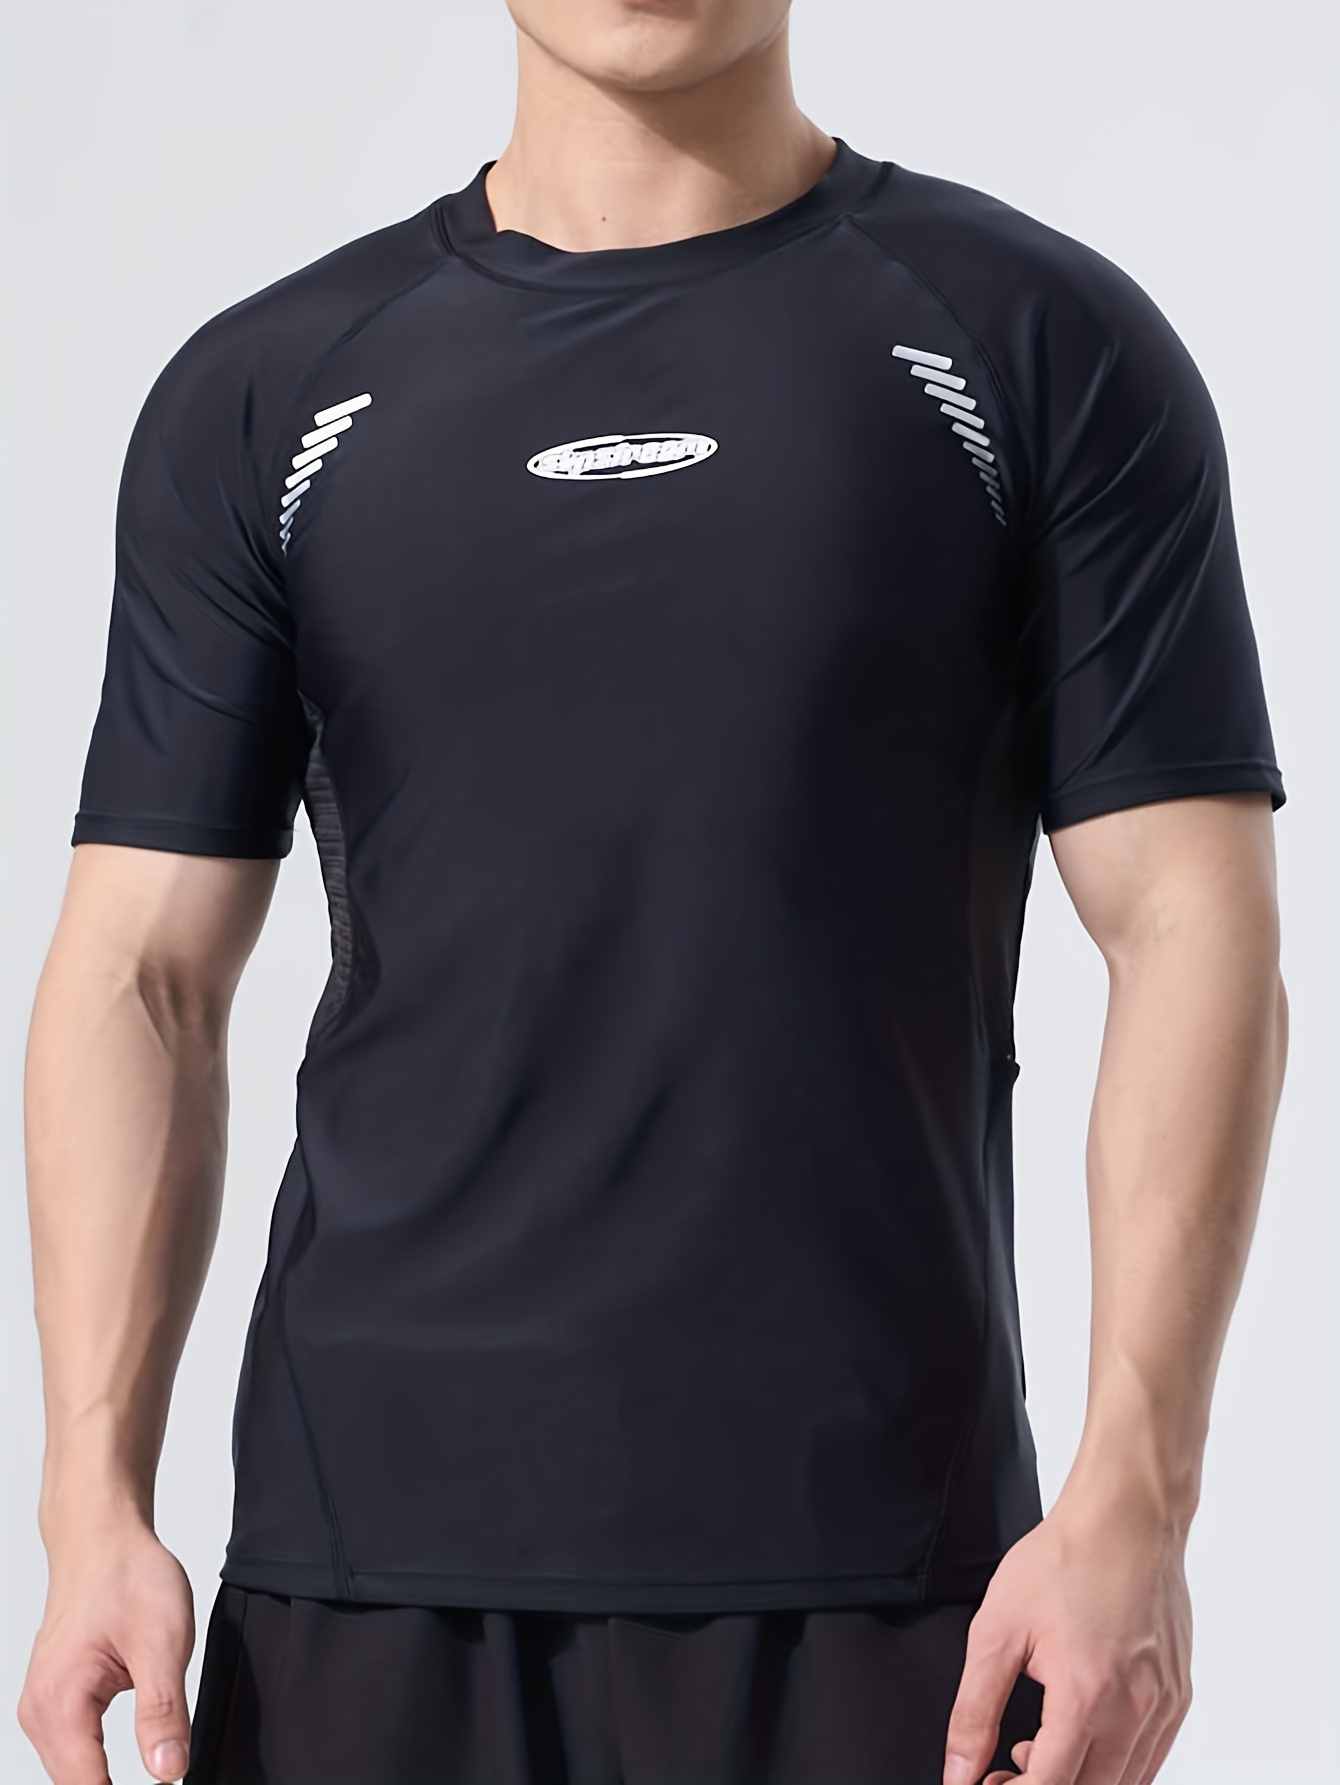 Best Swim Shirts in 2023 - Top 5 Review  Men's Short Sleeve Rashguard Swim  Shirts 